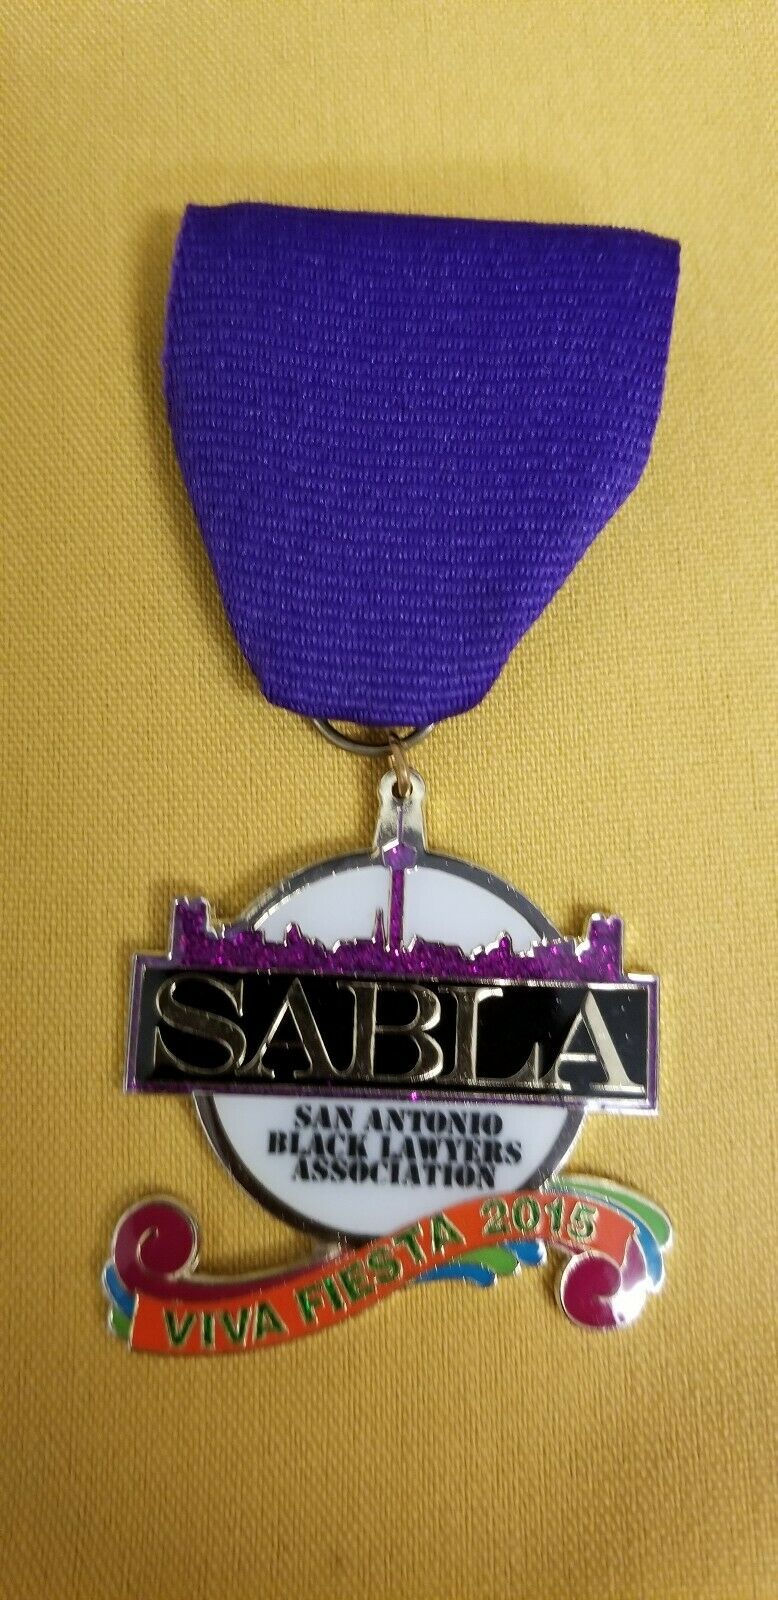 2015 Sabla "san Antonio Black Lawyers Association"